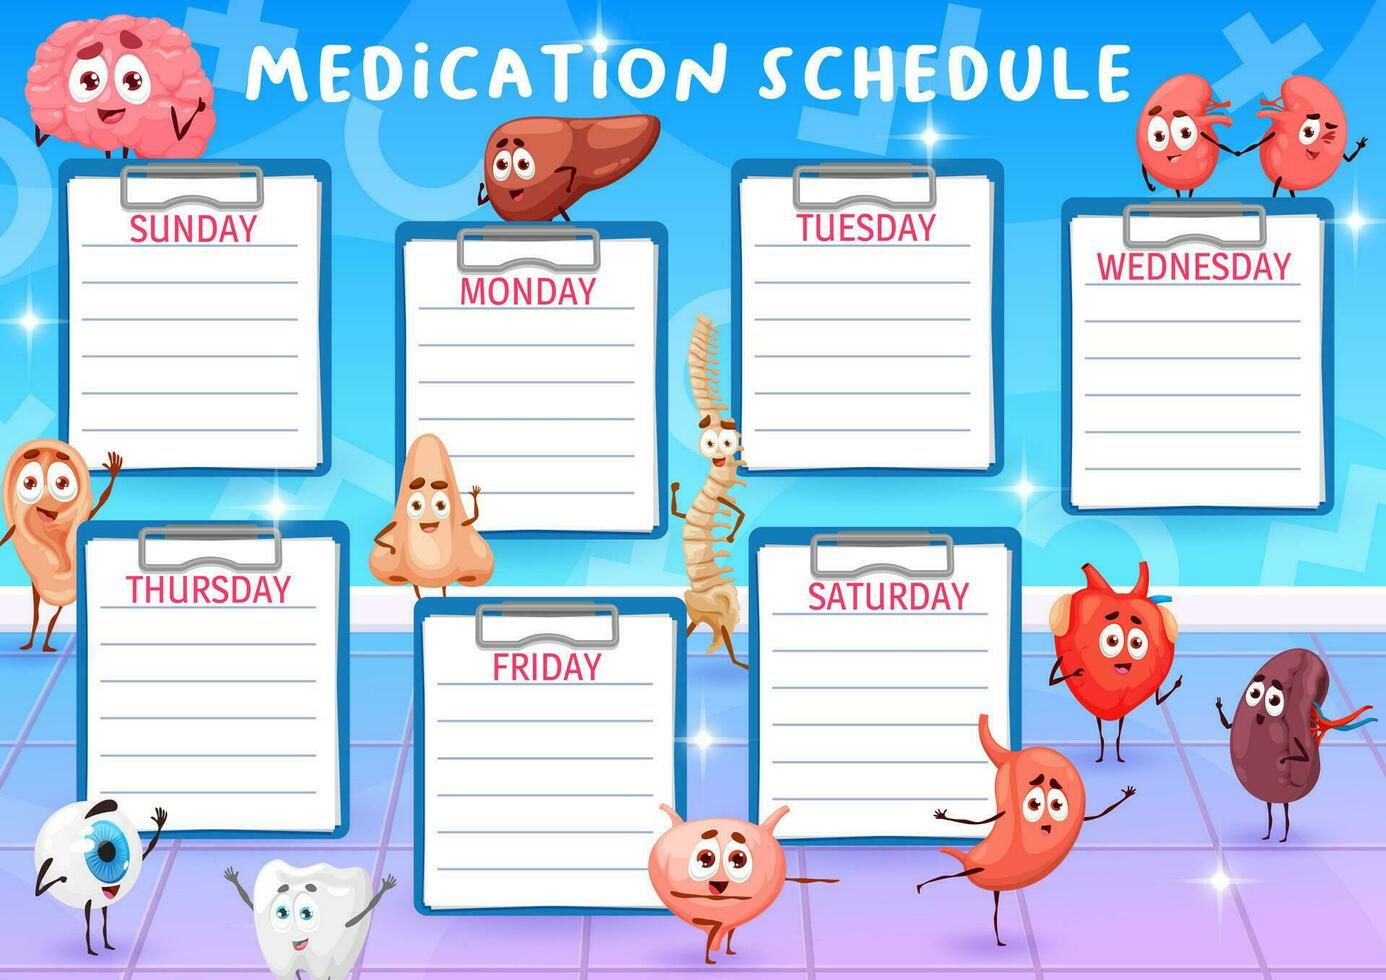 Medication schedule cartoon human organ characters vector